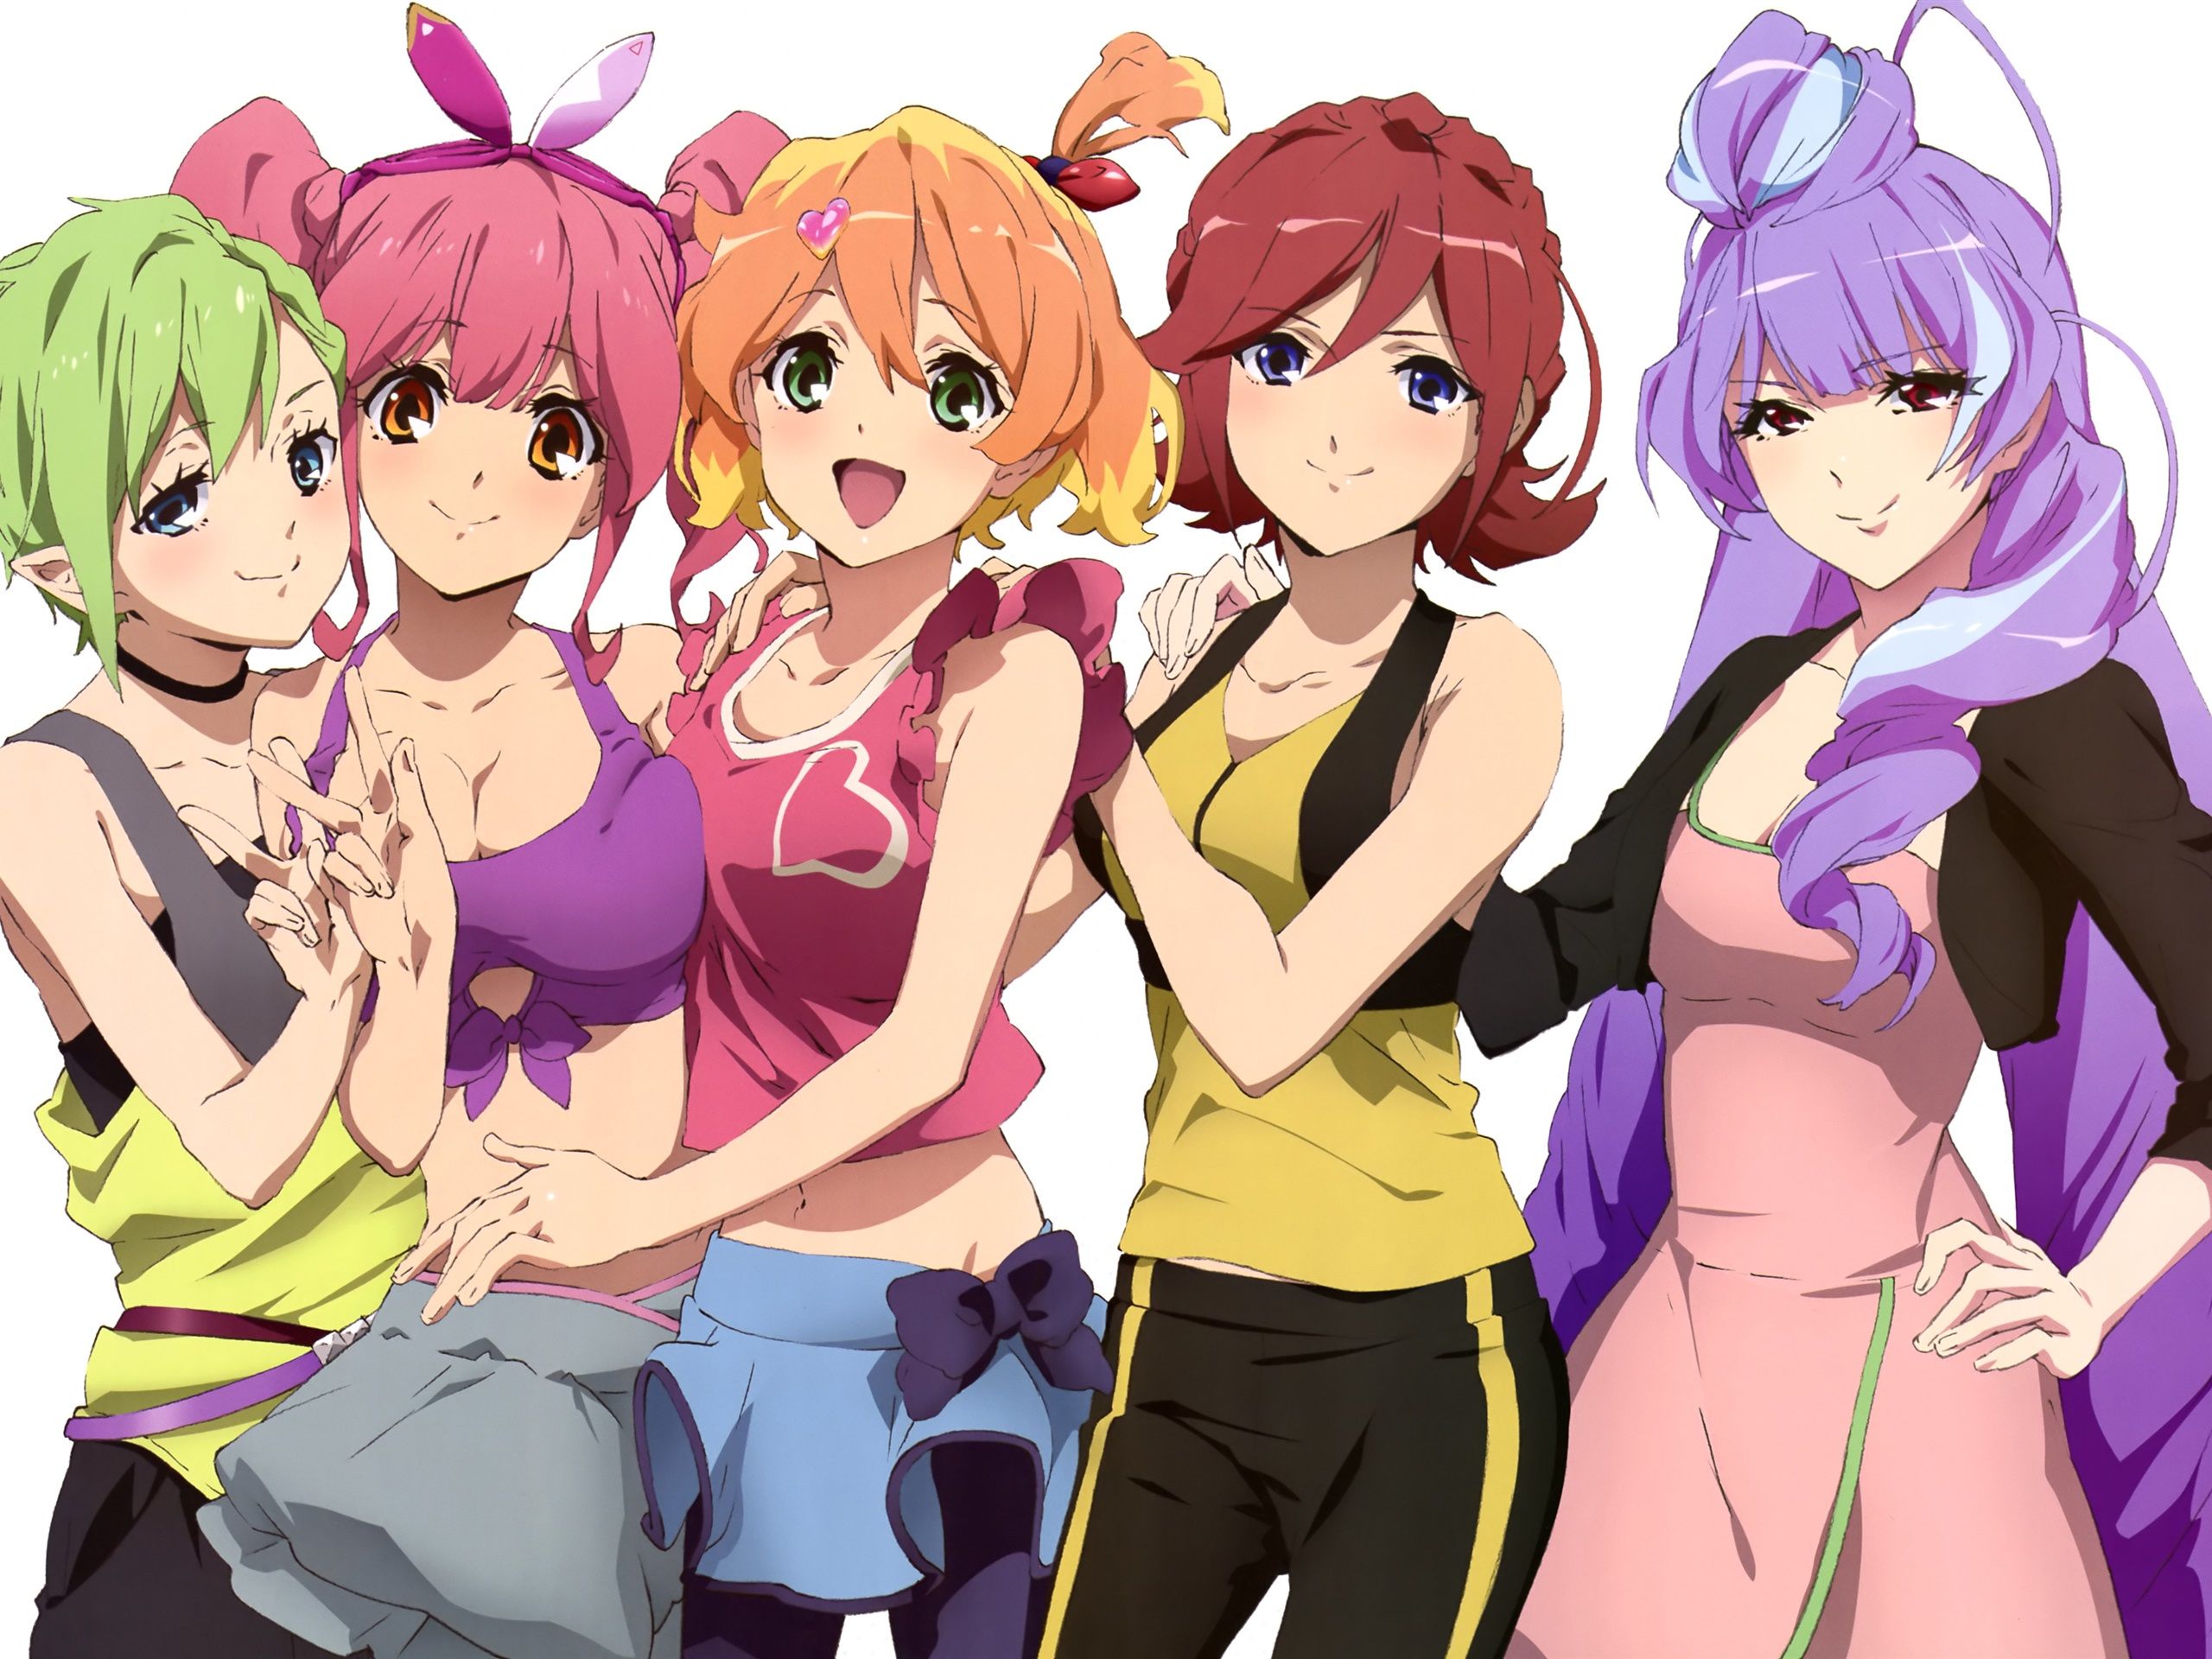 Wallpaper Macross, five anime girls 3840x2160 UHD 4K Picture, Image